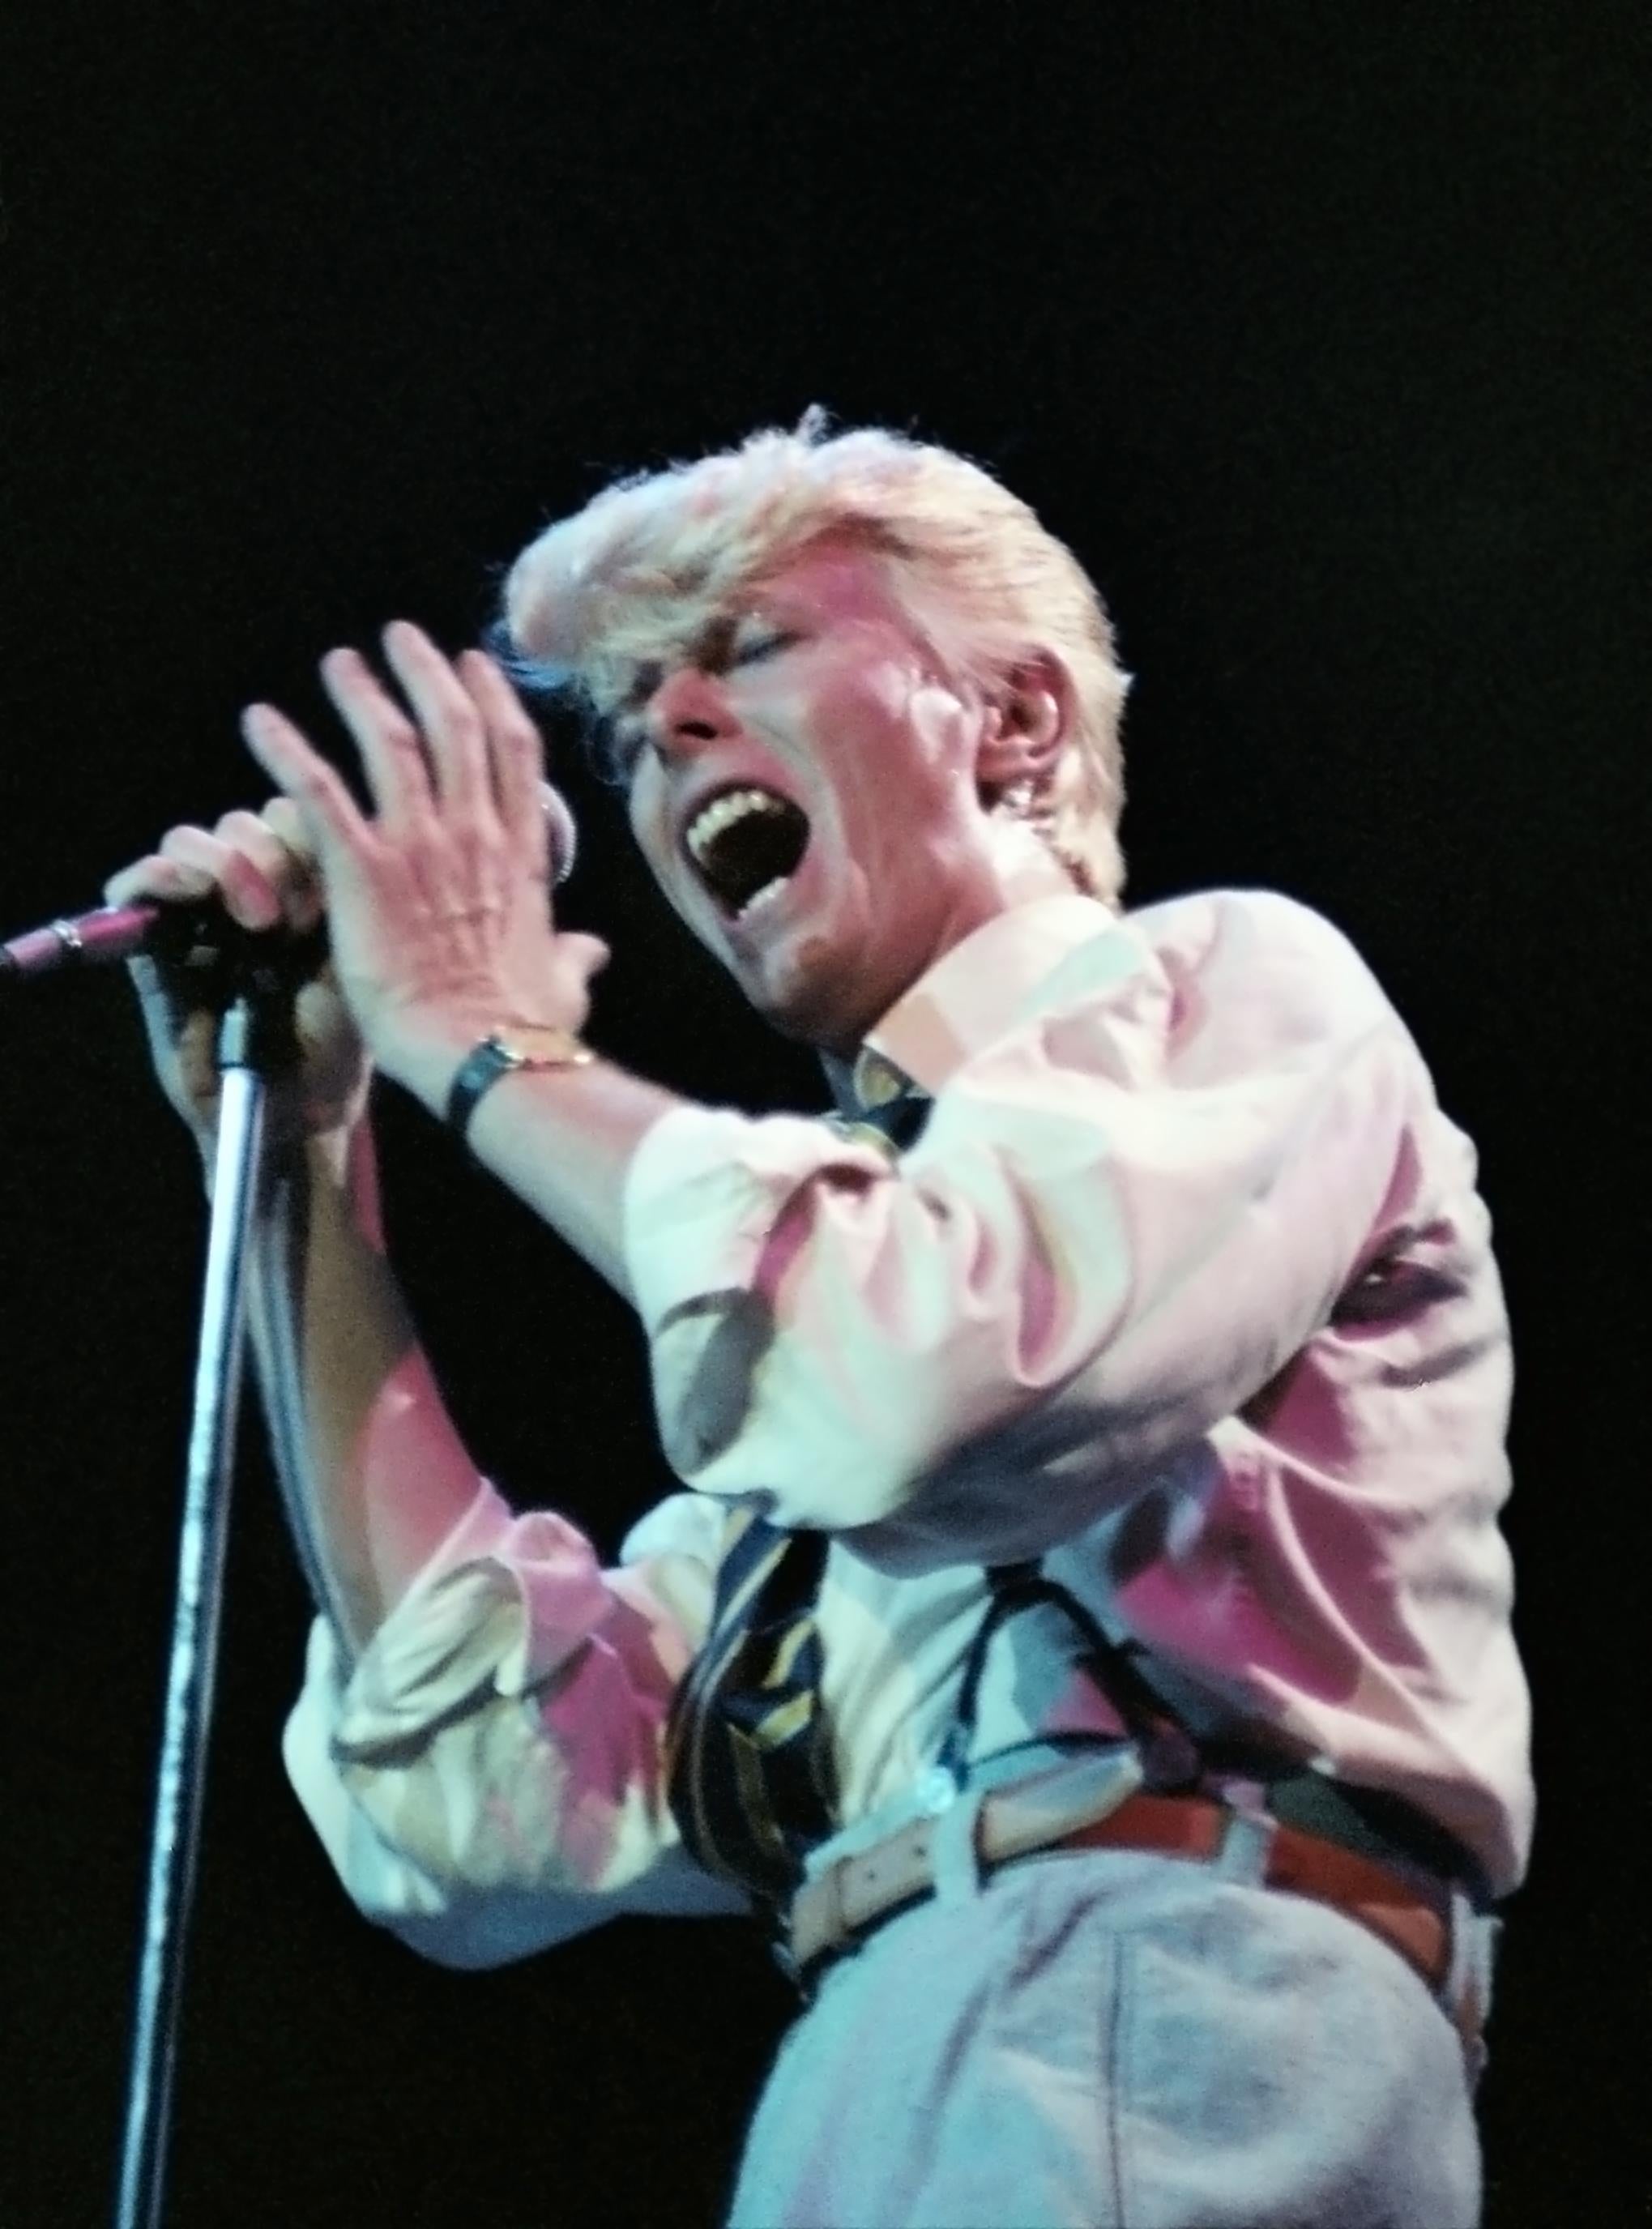 Tony Defilippis Portrait Photograph - David Bowie Singing in "Serious Moonlight" Tour Fine Art Print